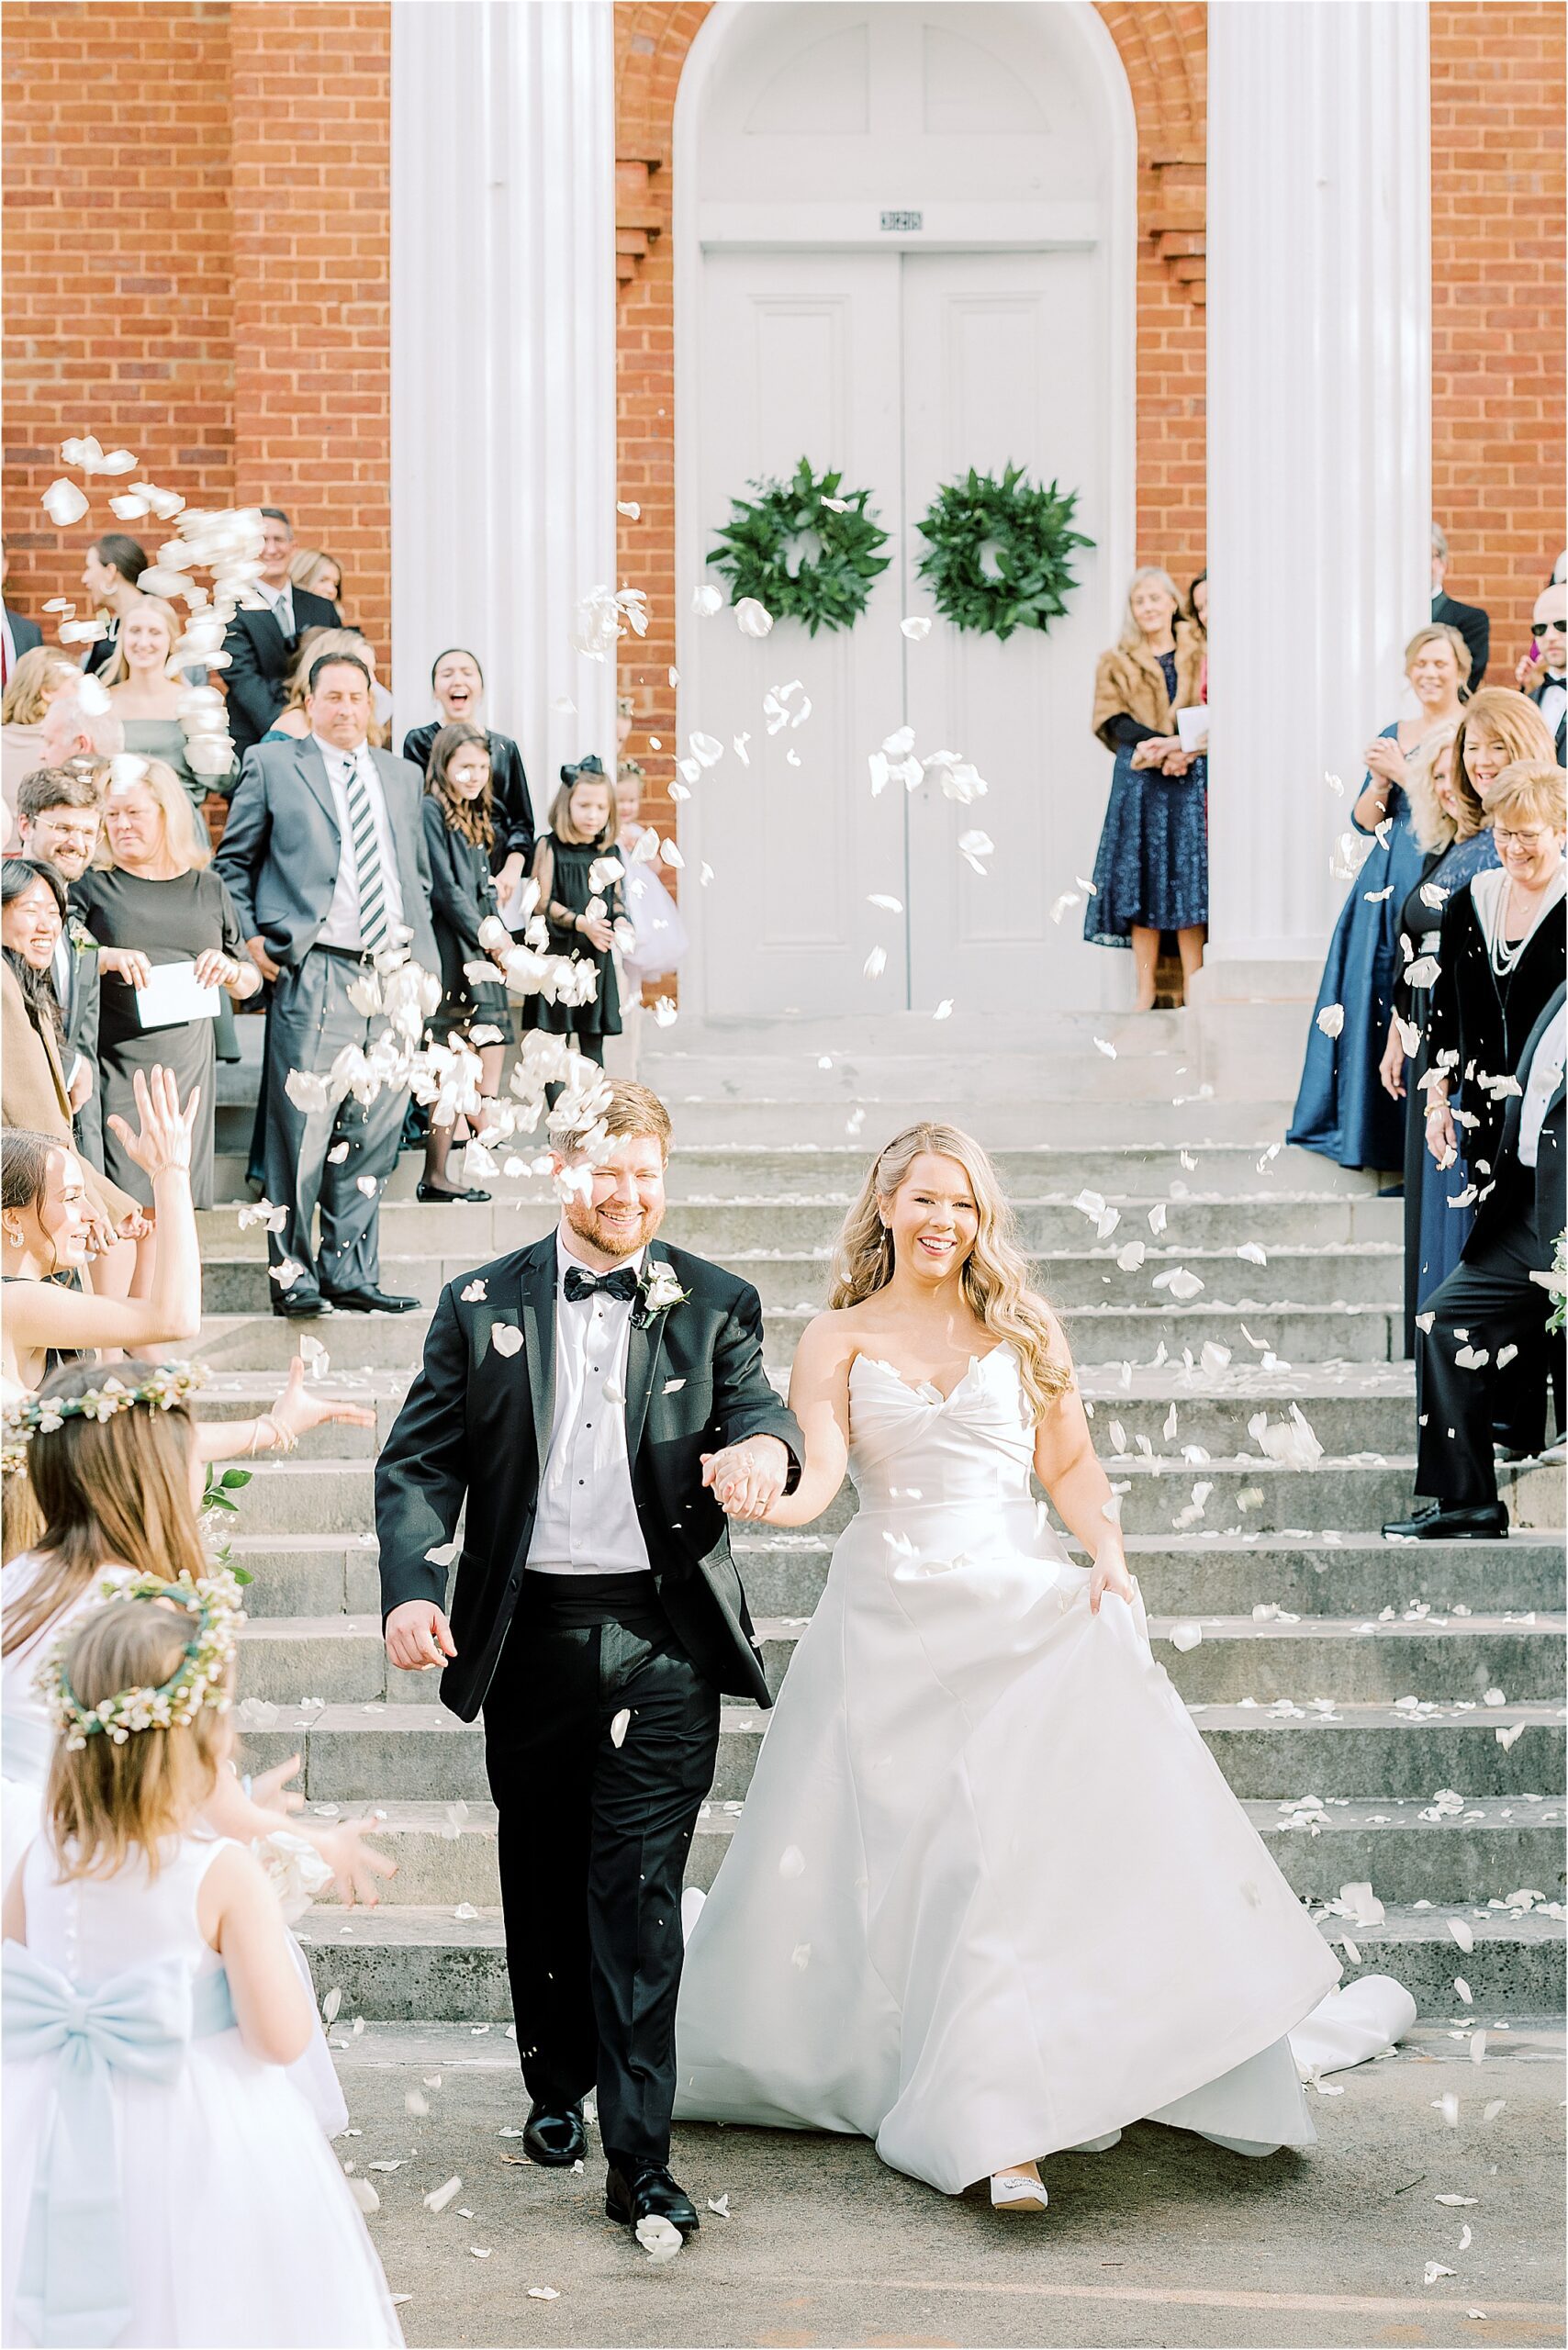 Bride and groom leaving brick church, guest throwing flower petals. 